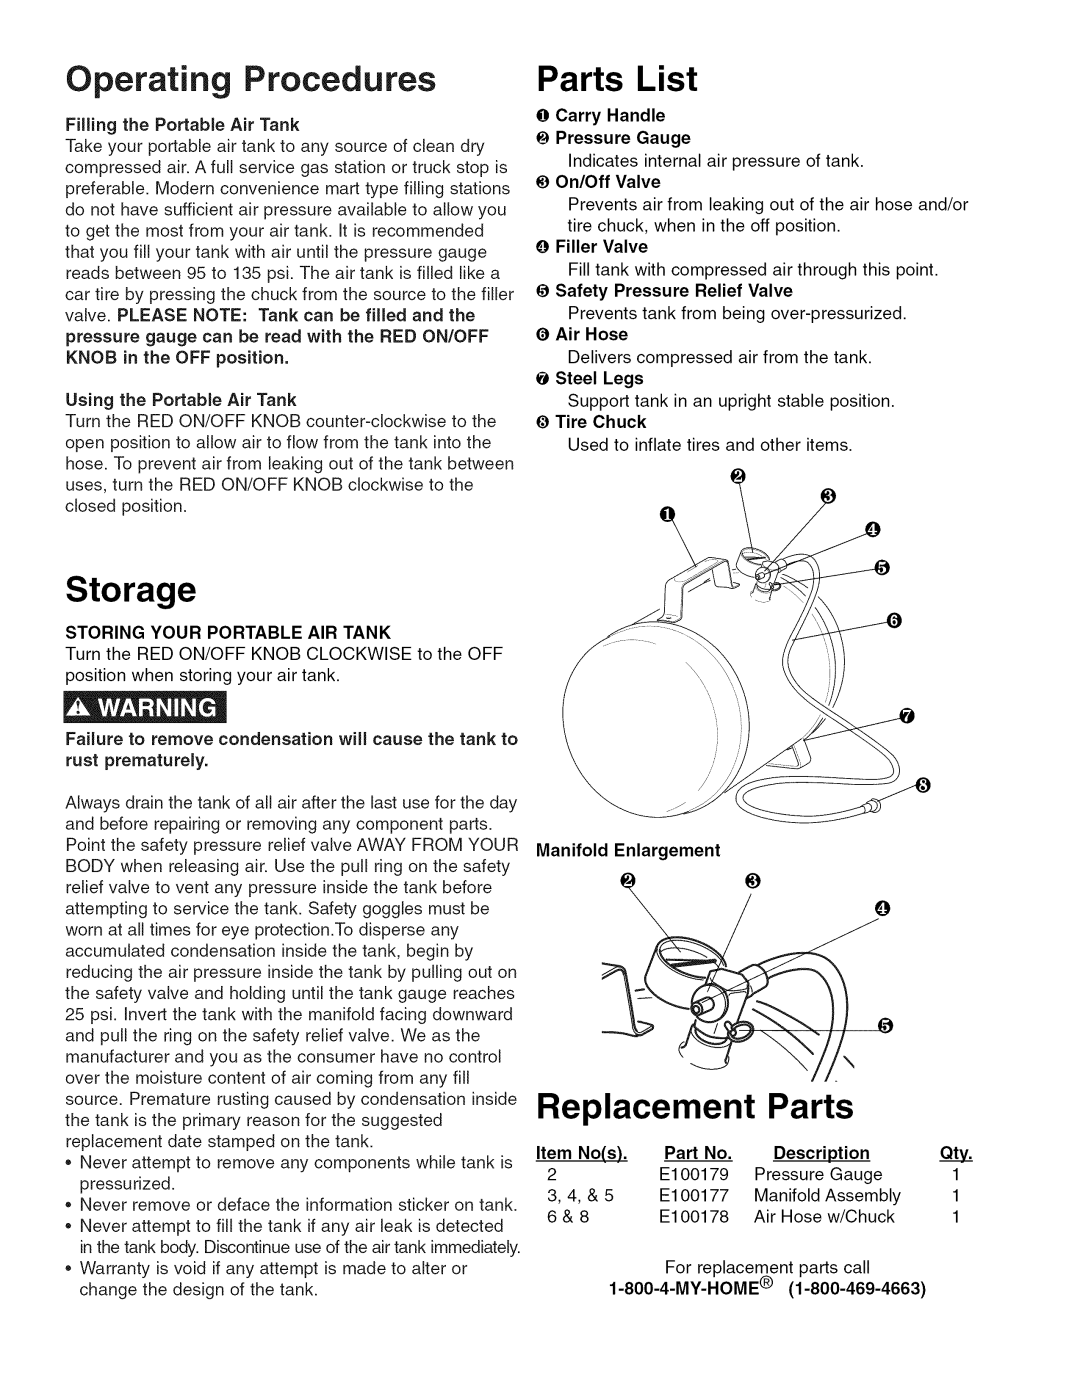 Craftsman 15201, 15200 Operating Procedures, Parts List, Storage, Replacement Parts, O Carry Handle Pressure Gauge 